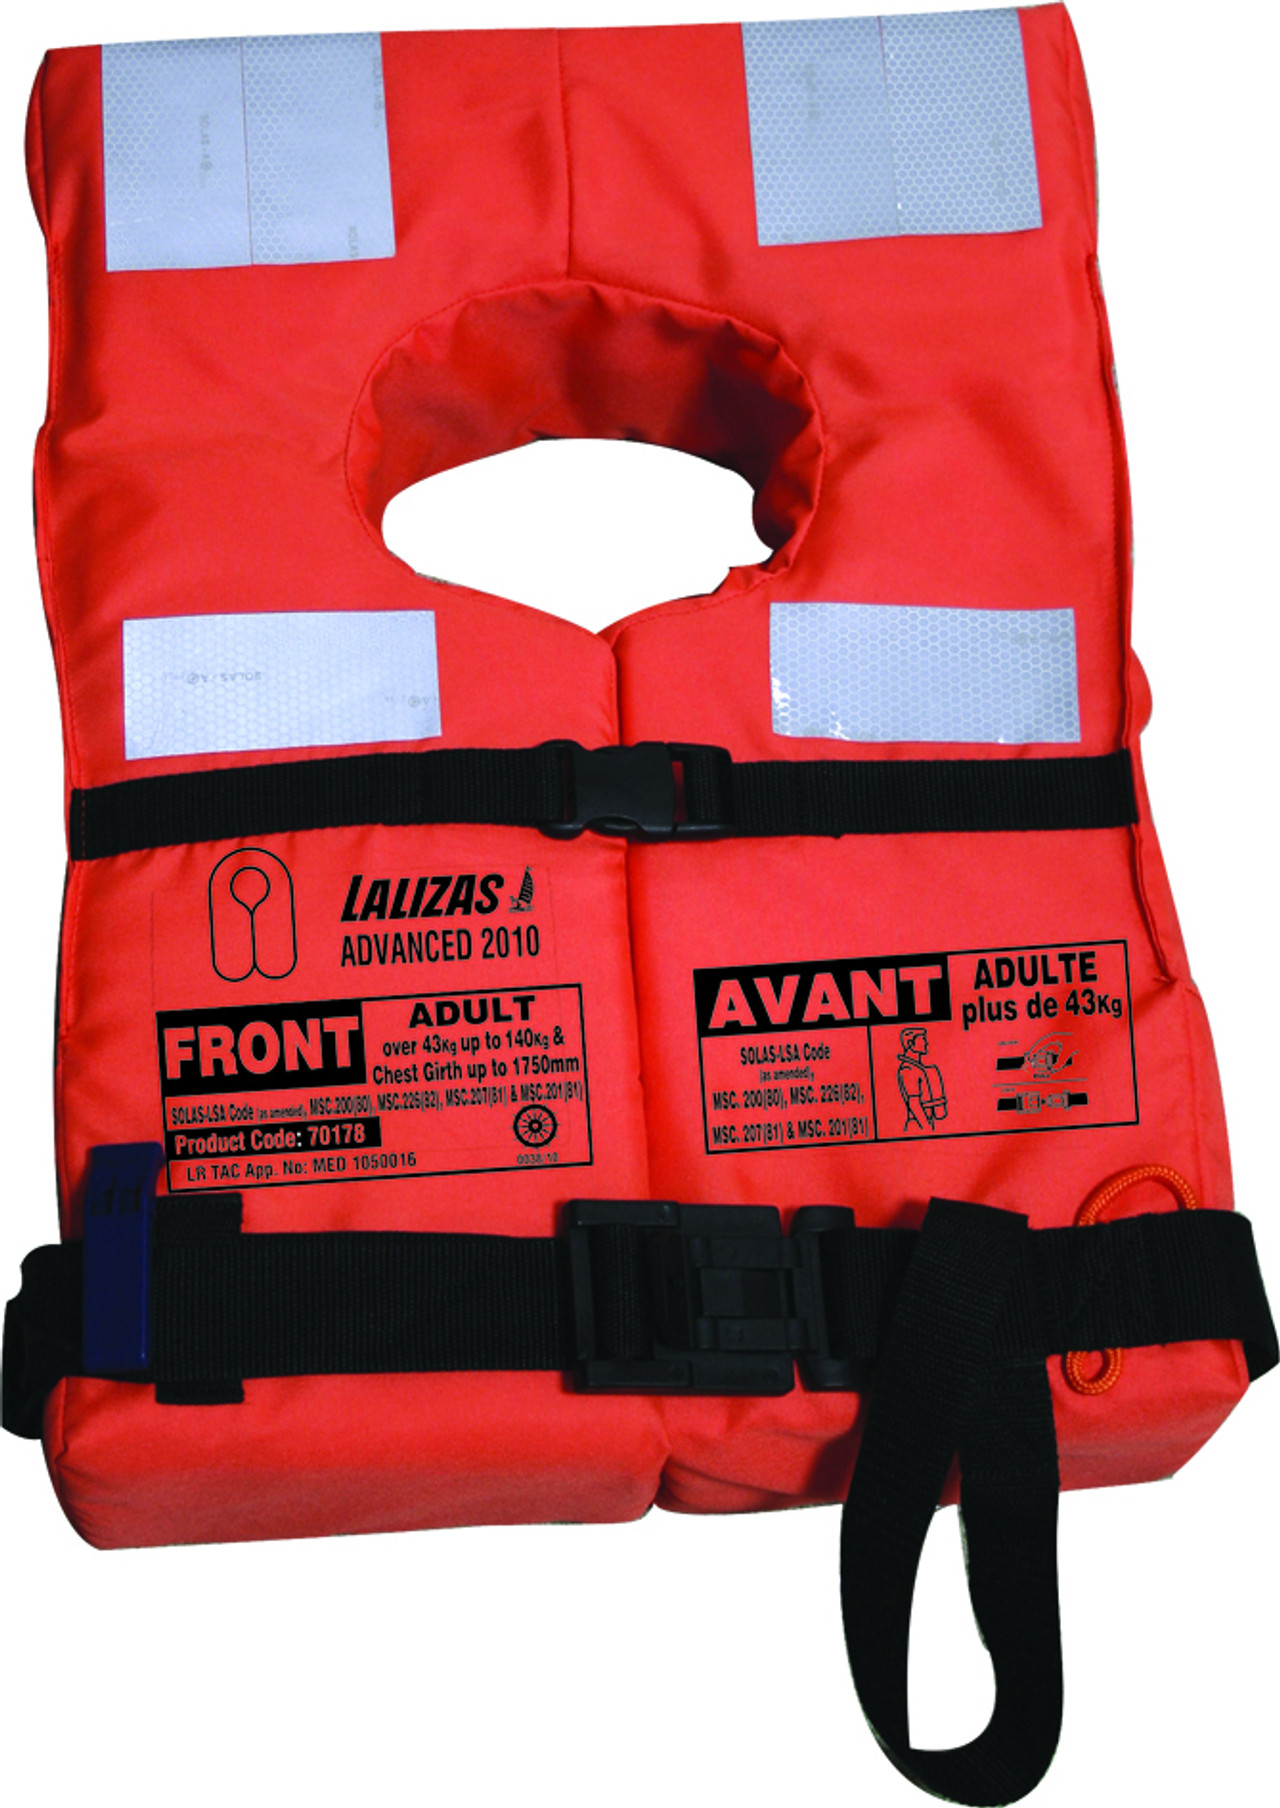 Lifejacket Adult SOLAS - Australian Boating Supplies